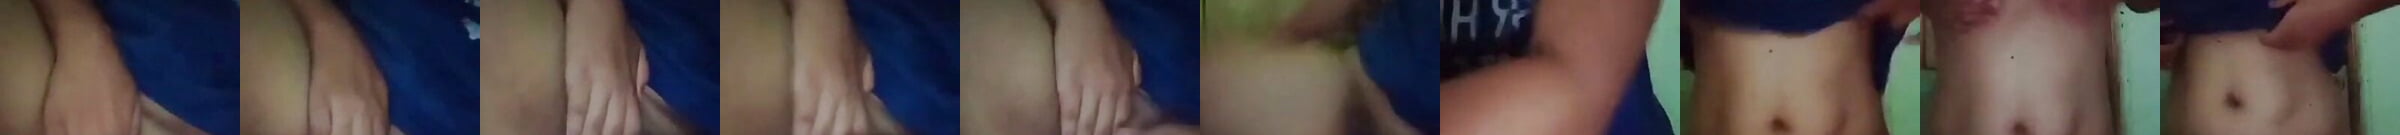 Titty Fucking Porn Videos Cocks Bang Boobs Xhamster